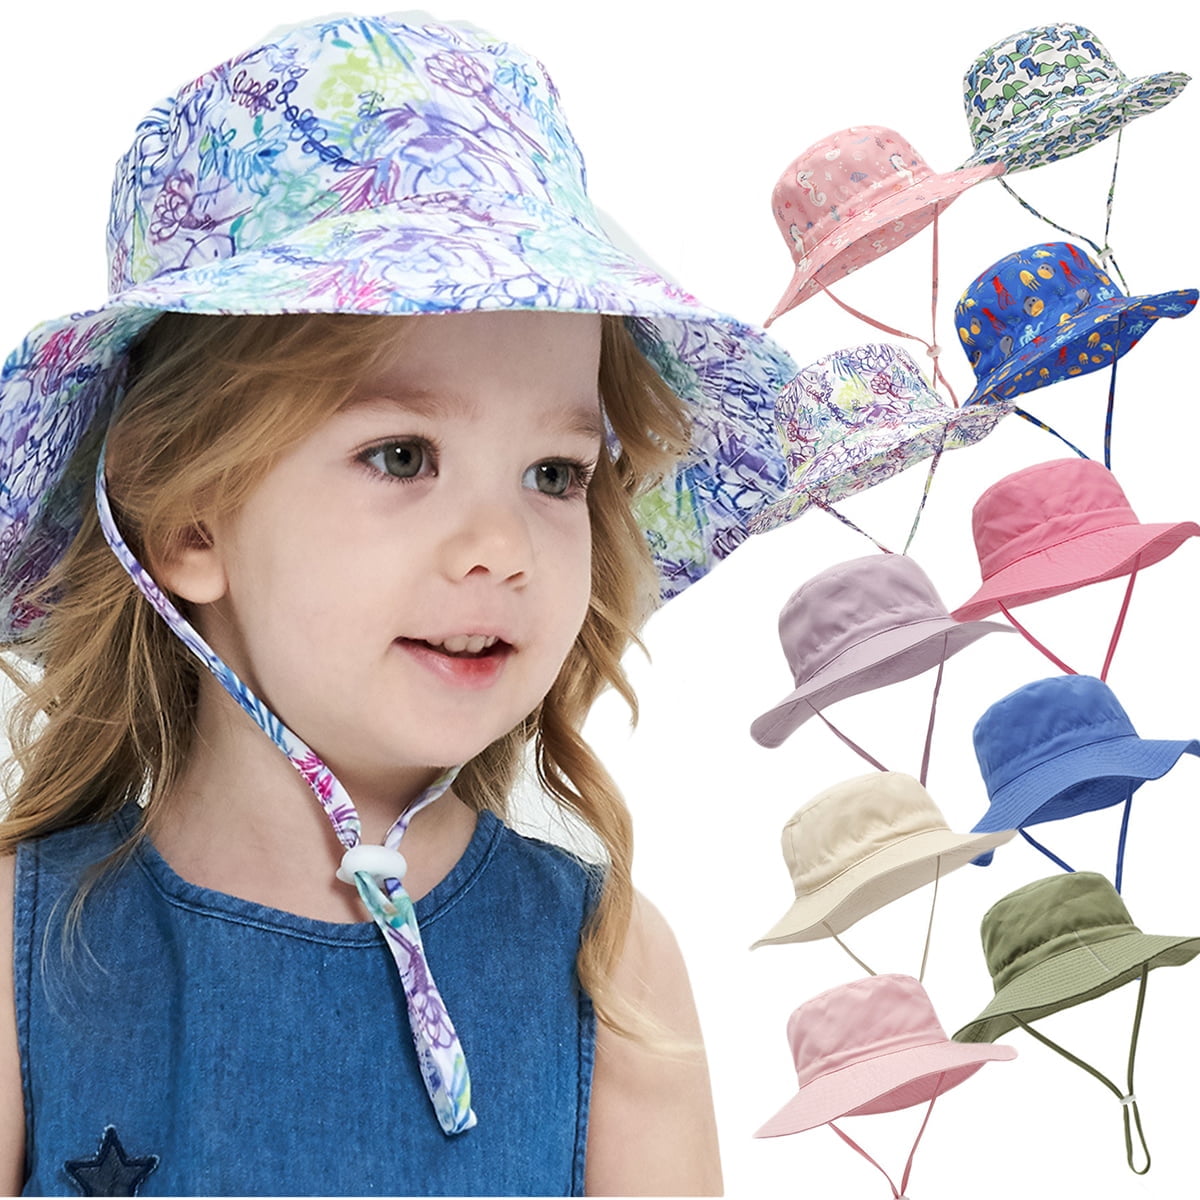 Vorkoi Baby Sun Hat UPF 50+ Sun Protective Toddler Bucket Hat Summer Kids Beach Hats Wide Brim Outdoor Play Hat for Boys Girls, Infant Unisex, Size